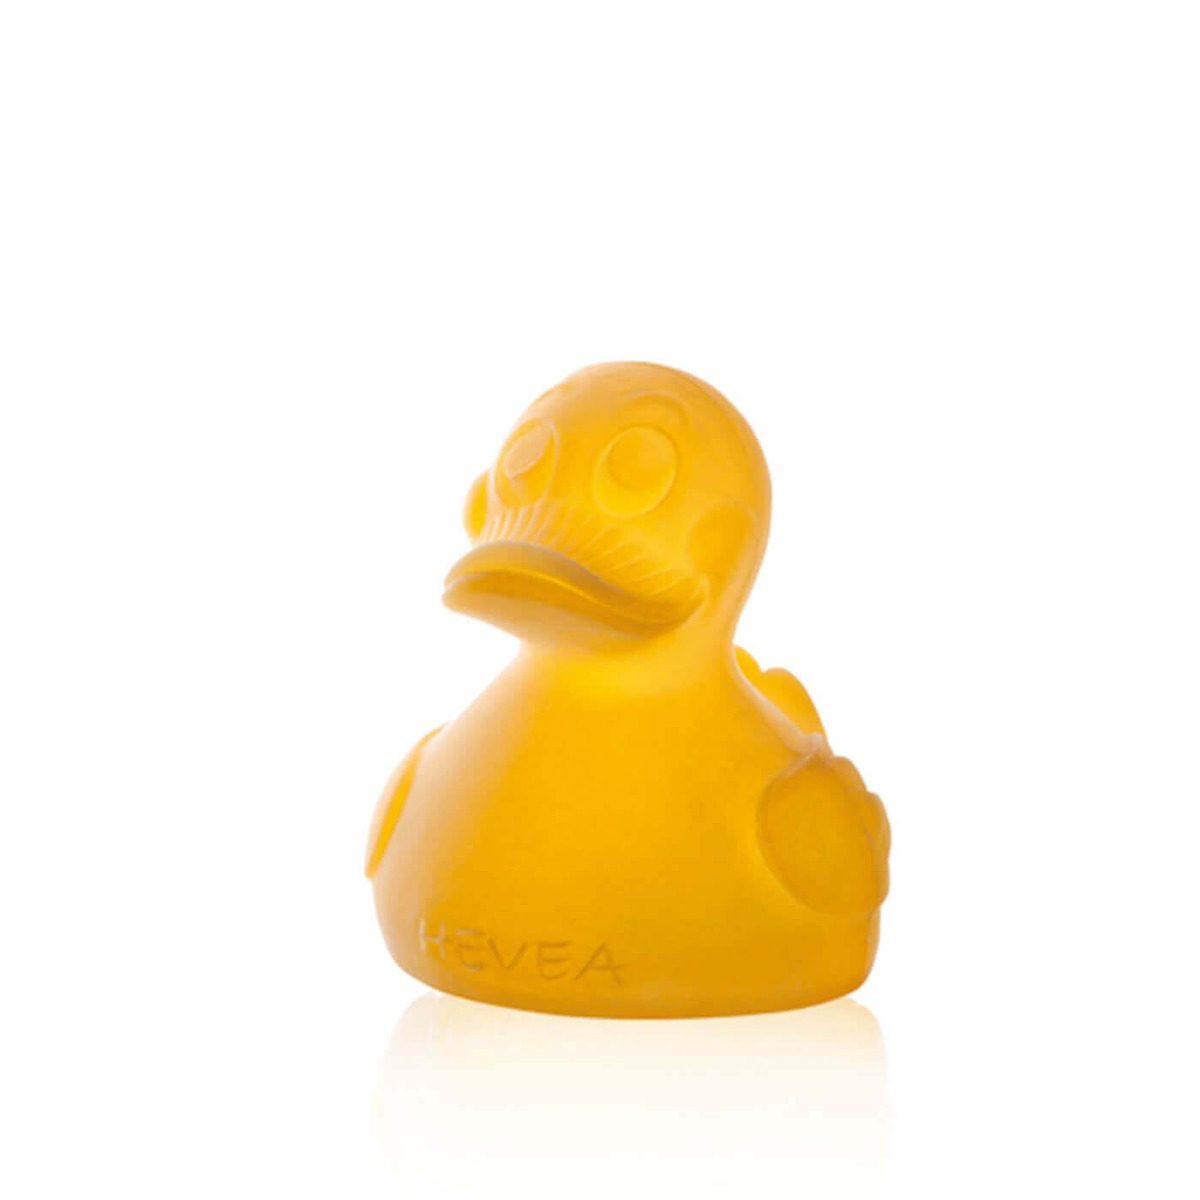 Alfie the Duck - Natural Rubber Bath Toy - Hevea